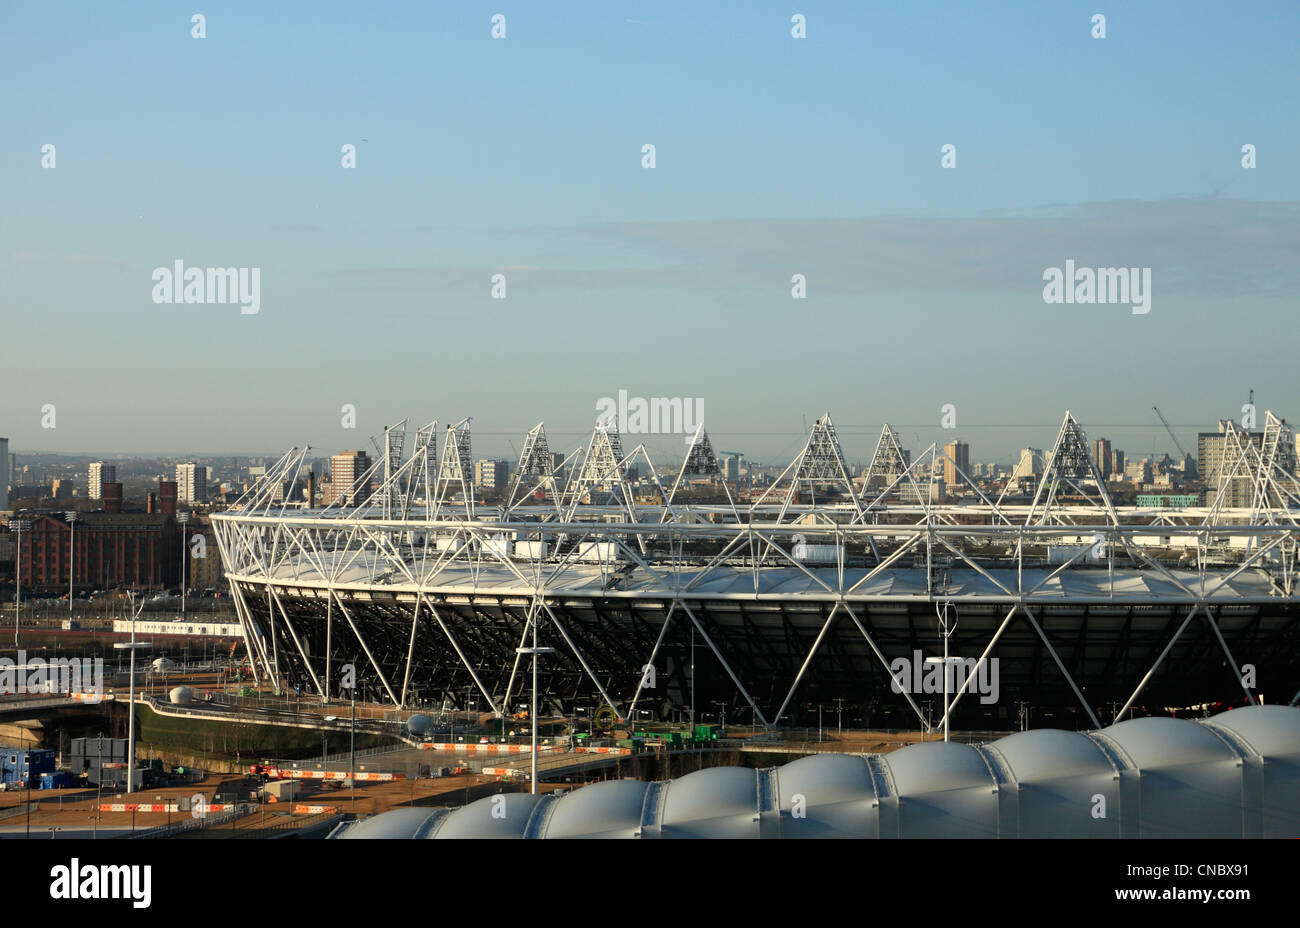 Olympia Leichtathletik Stadion Spiele Parken Stratford London Stockfoto